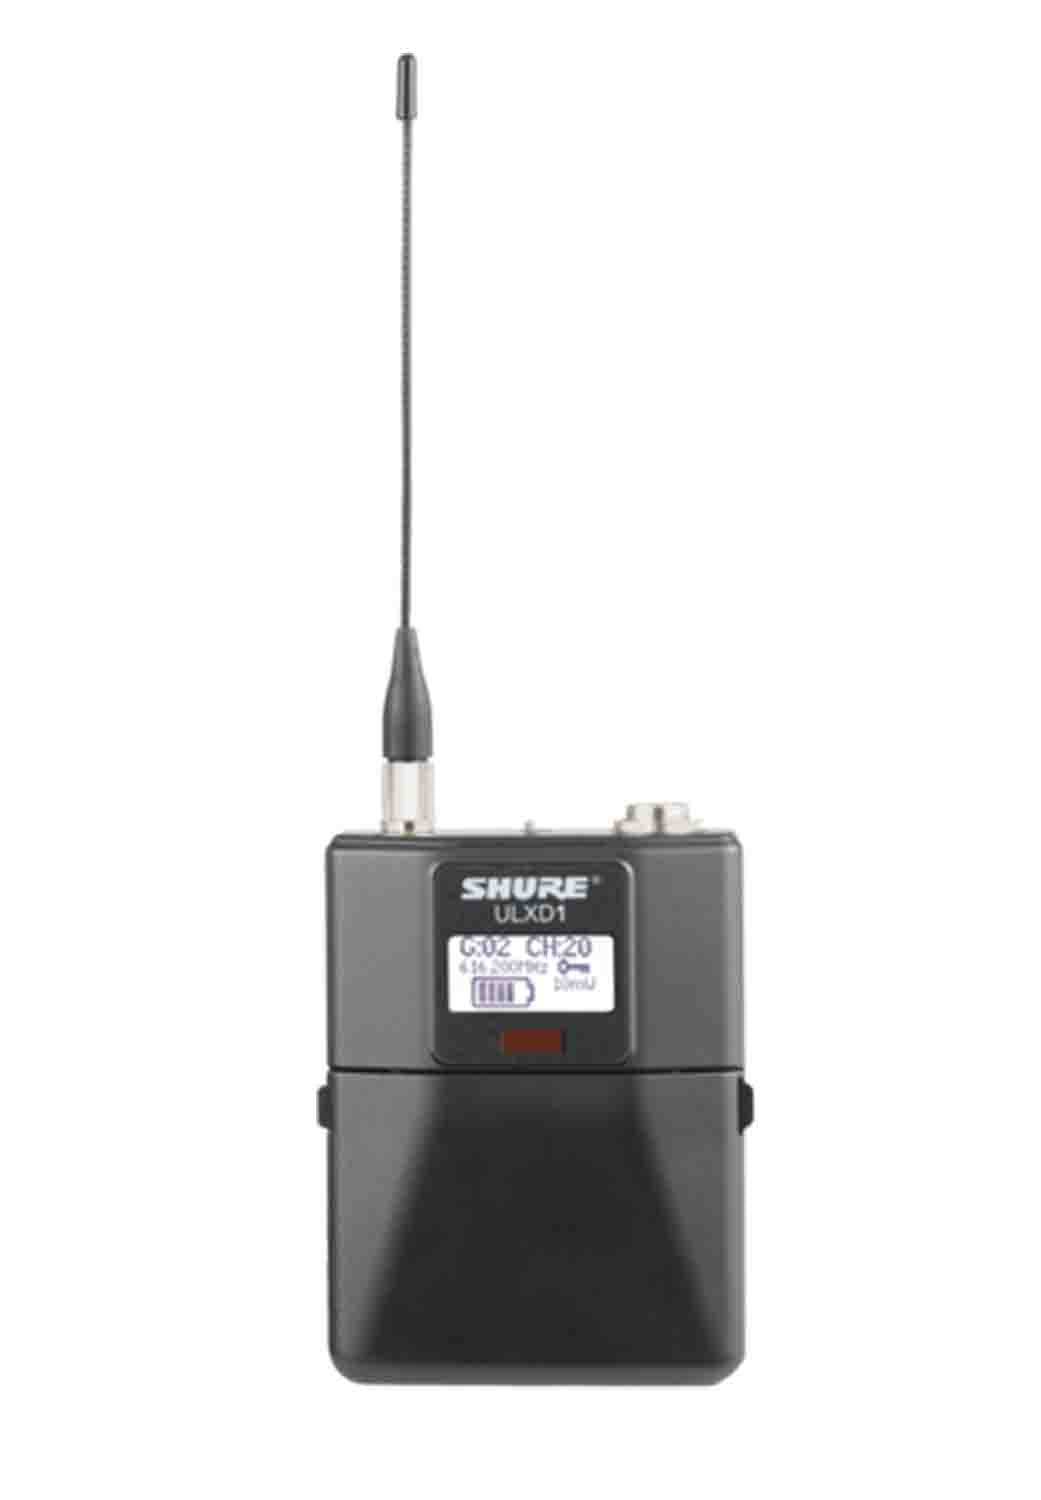 Shure ULXD1LEMO3 Digital Wireless Bodypack Transmitter with LEMO3 Connector - Hollywood DJ